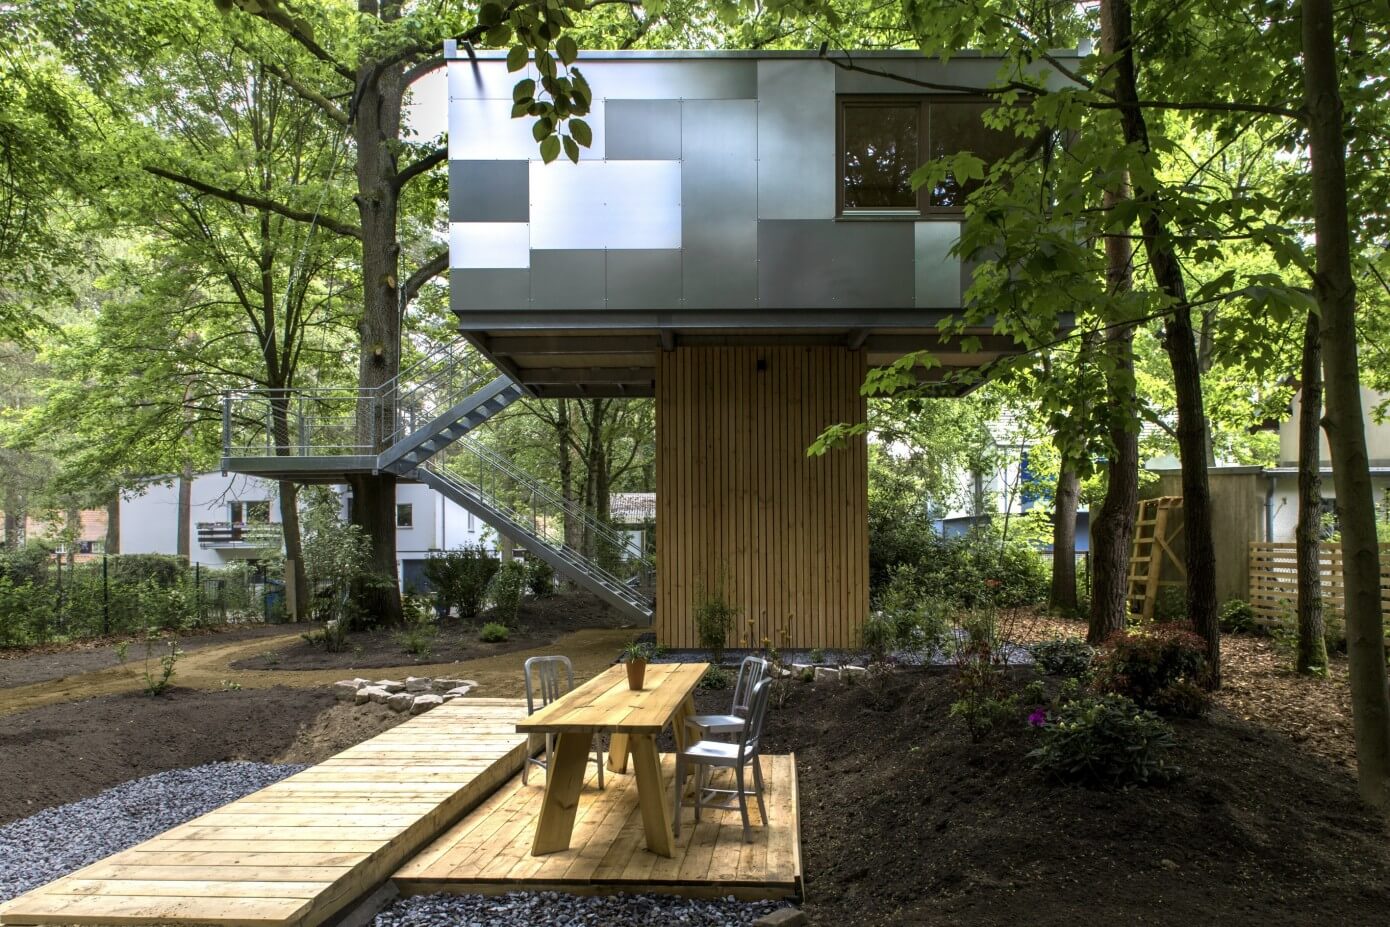 Urban Treehouse by Baumraum